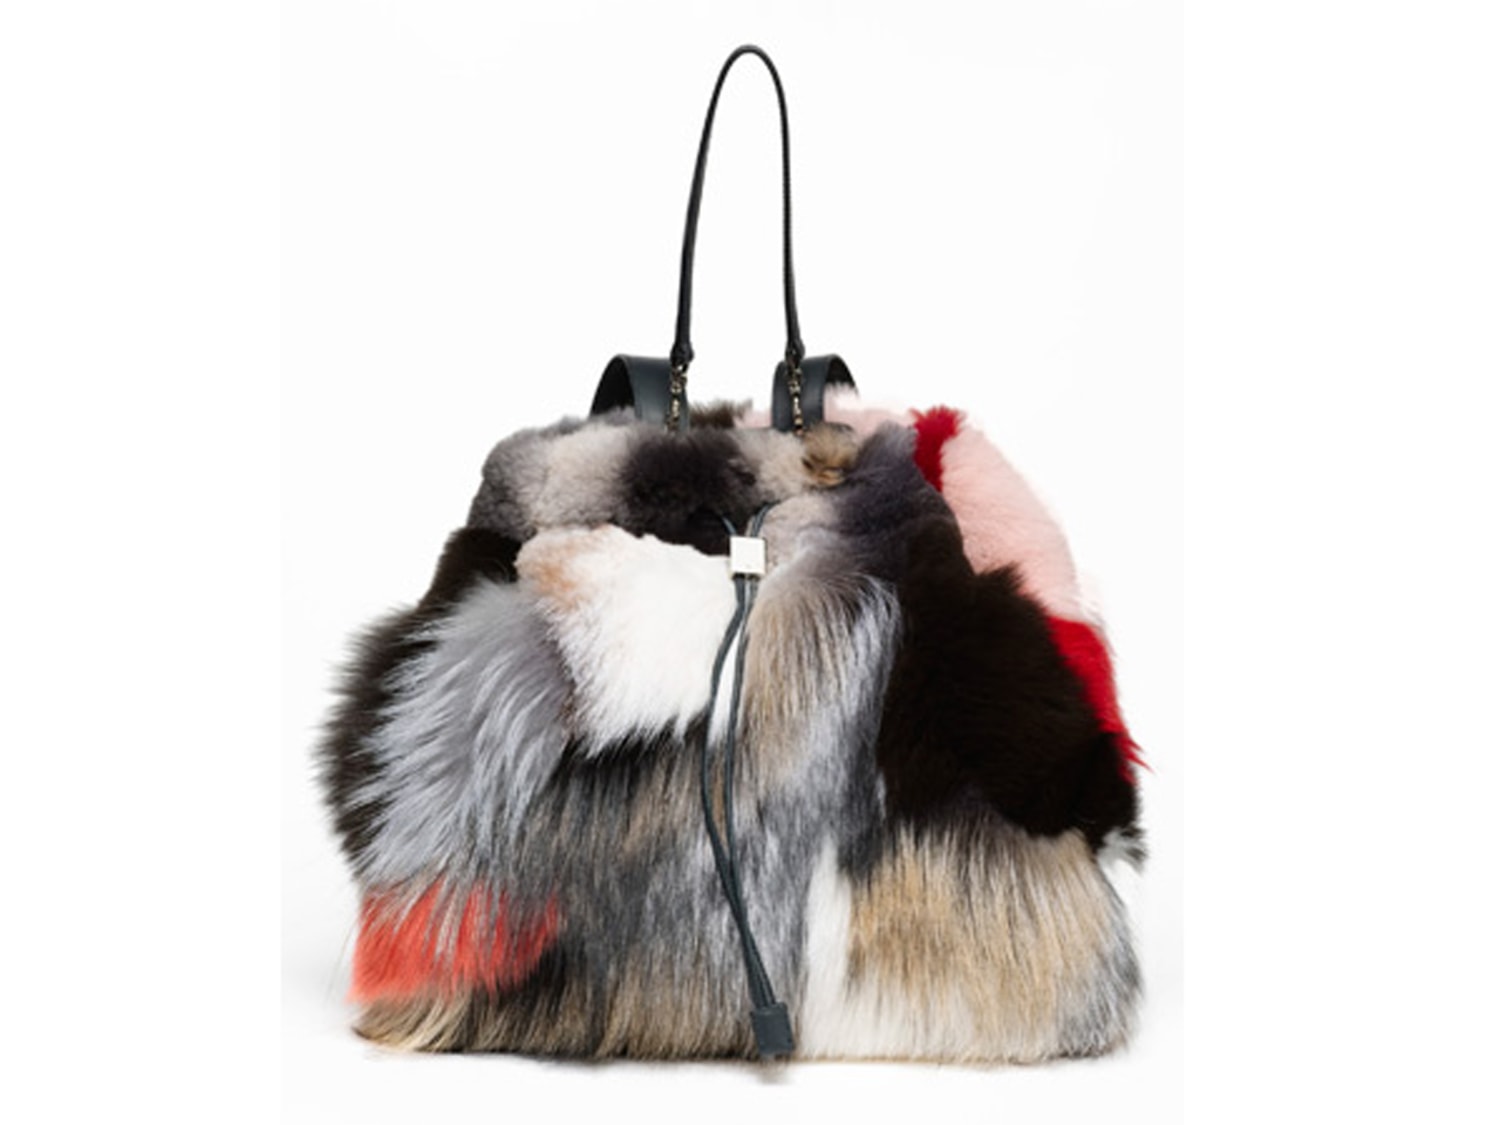 Got $17K? You can buy Olsen twins' bizarre furry backpack